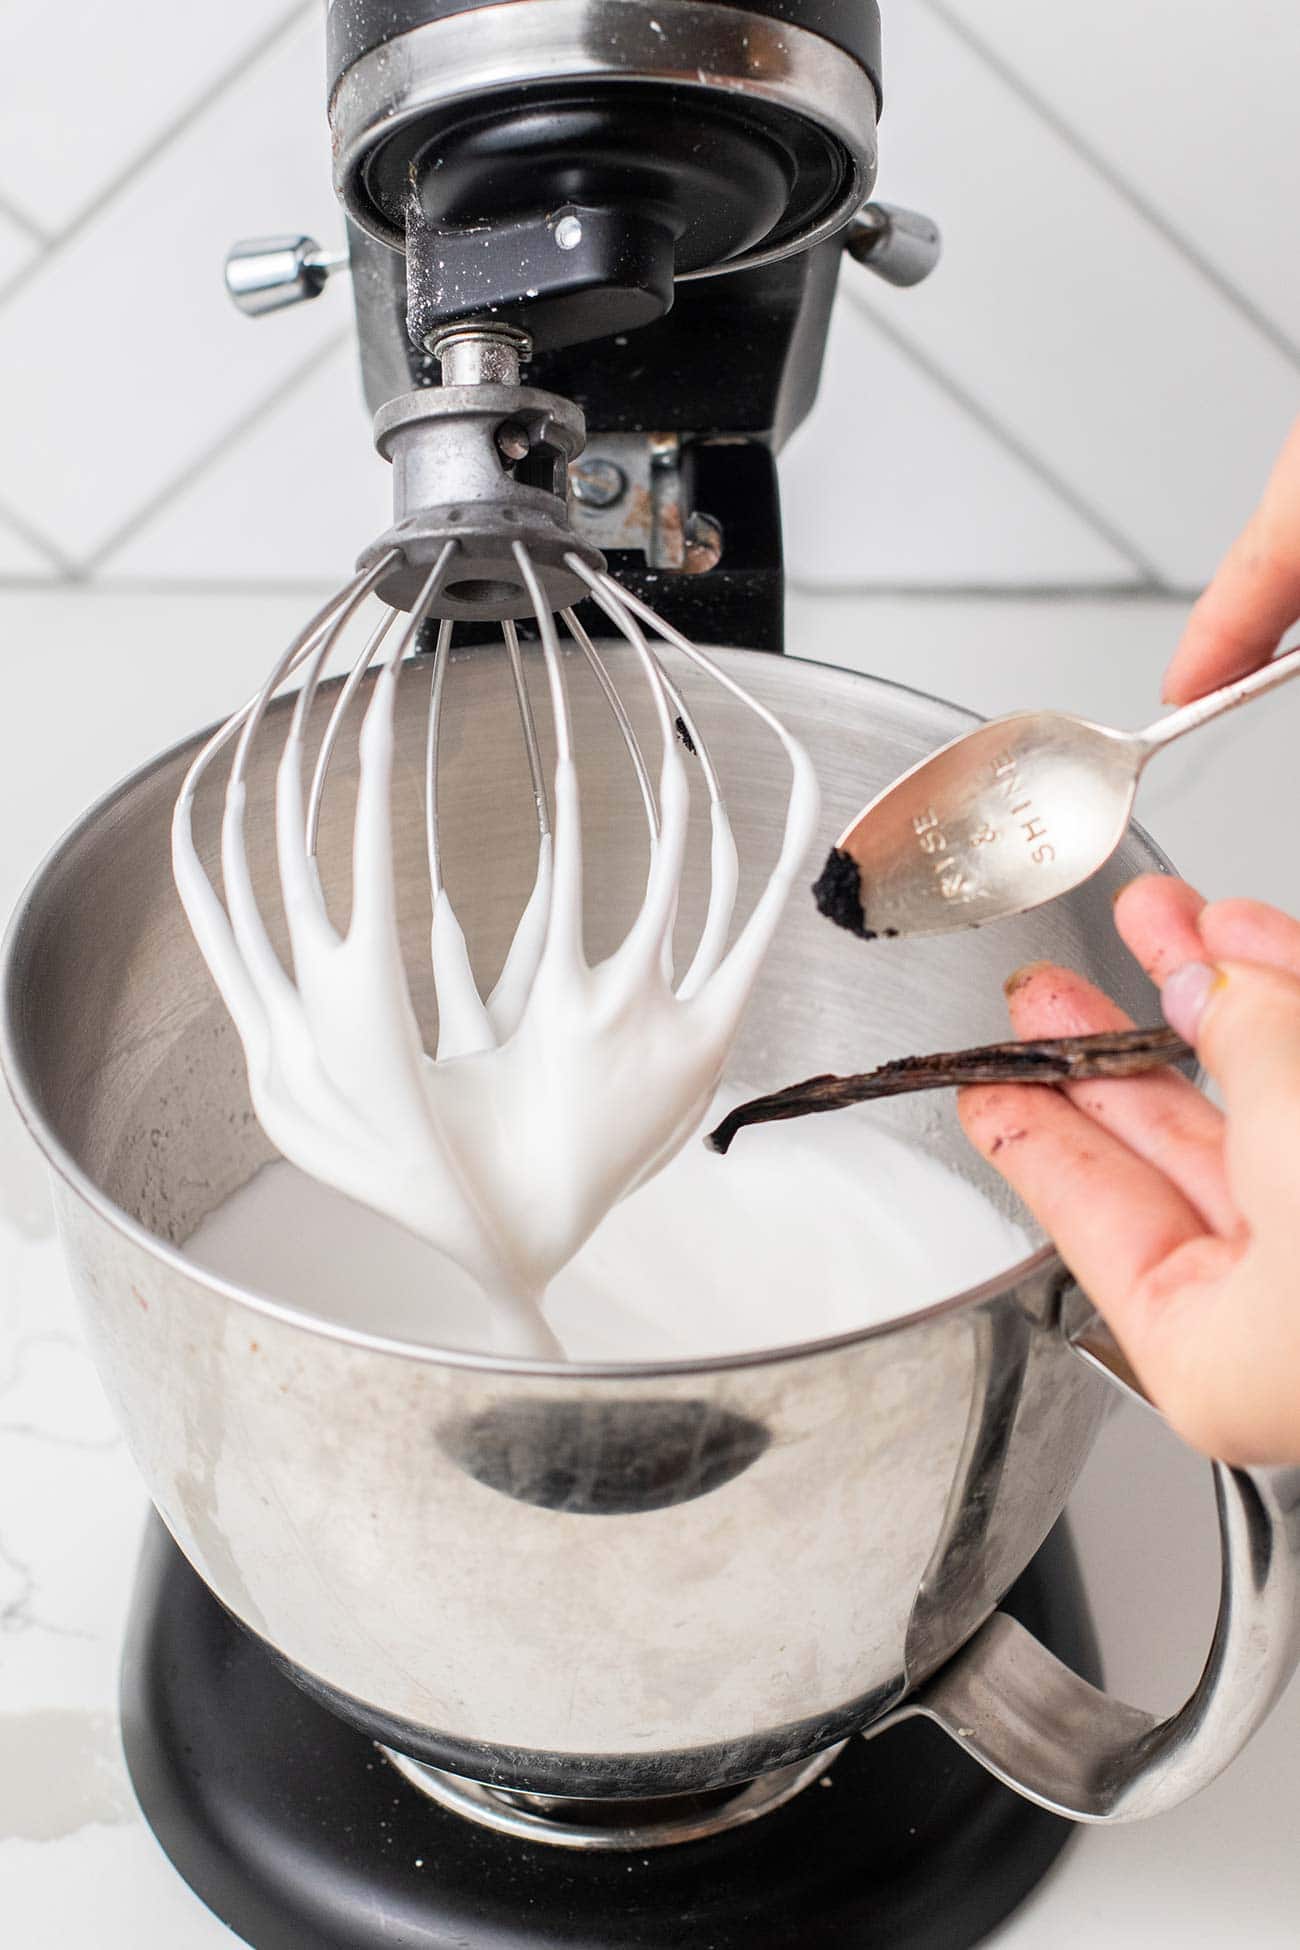 A spoon scraping the vanilla bean into the egg white mixture.